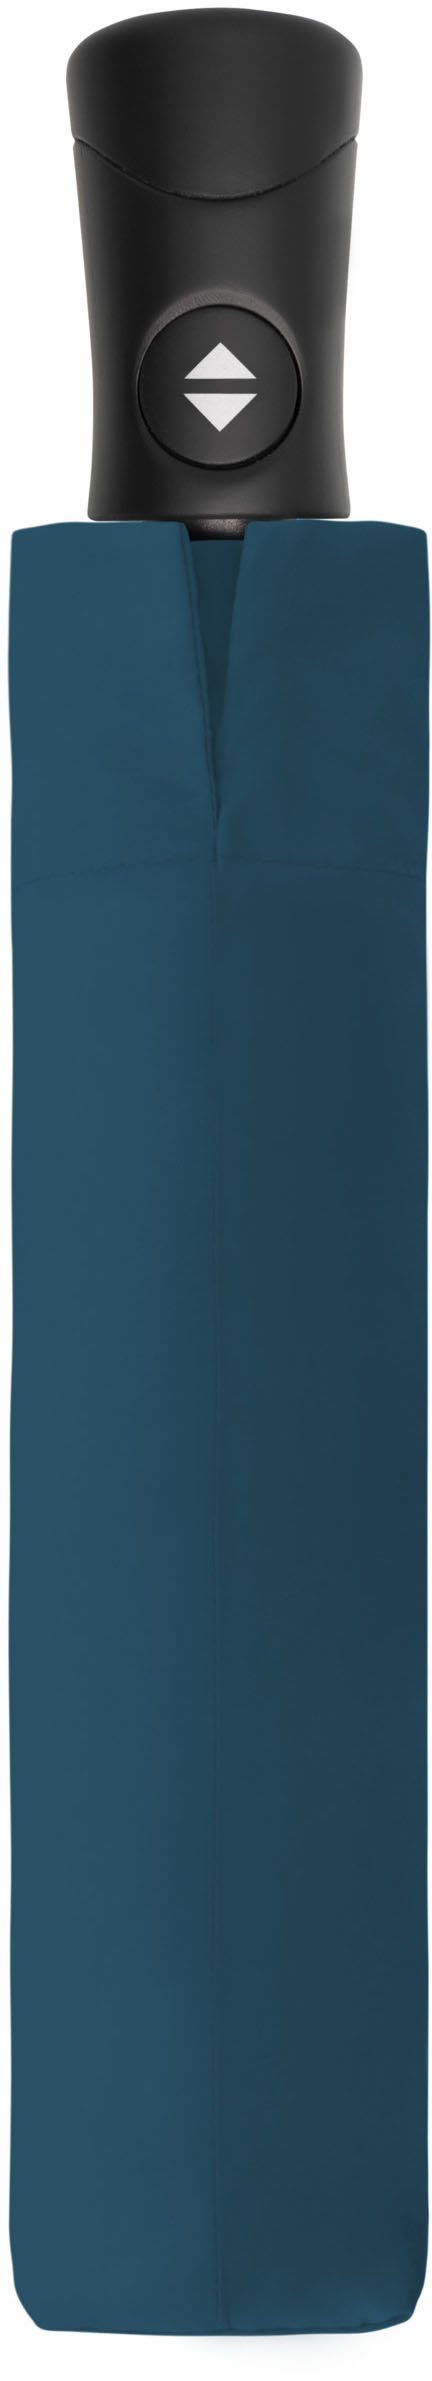 doppler® Taschenregenschirm Fiber Magic Superstrong, crystal uni blue